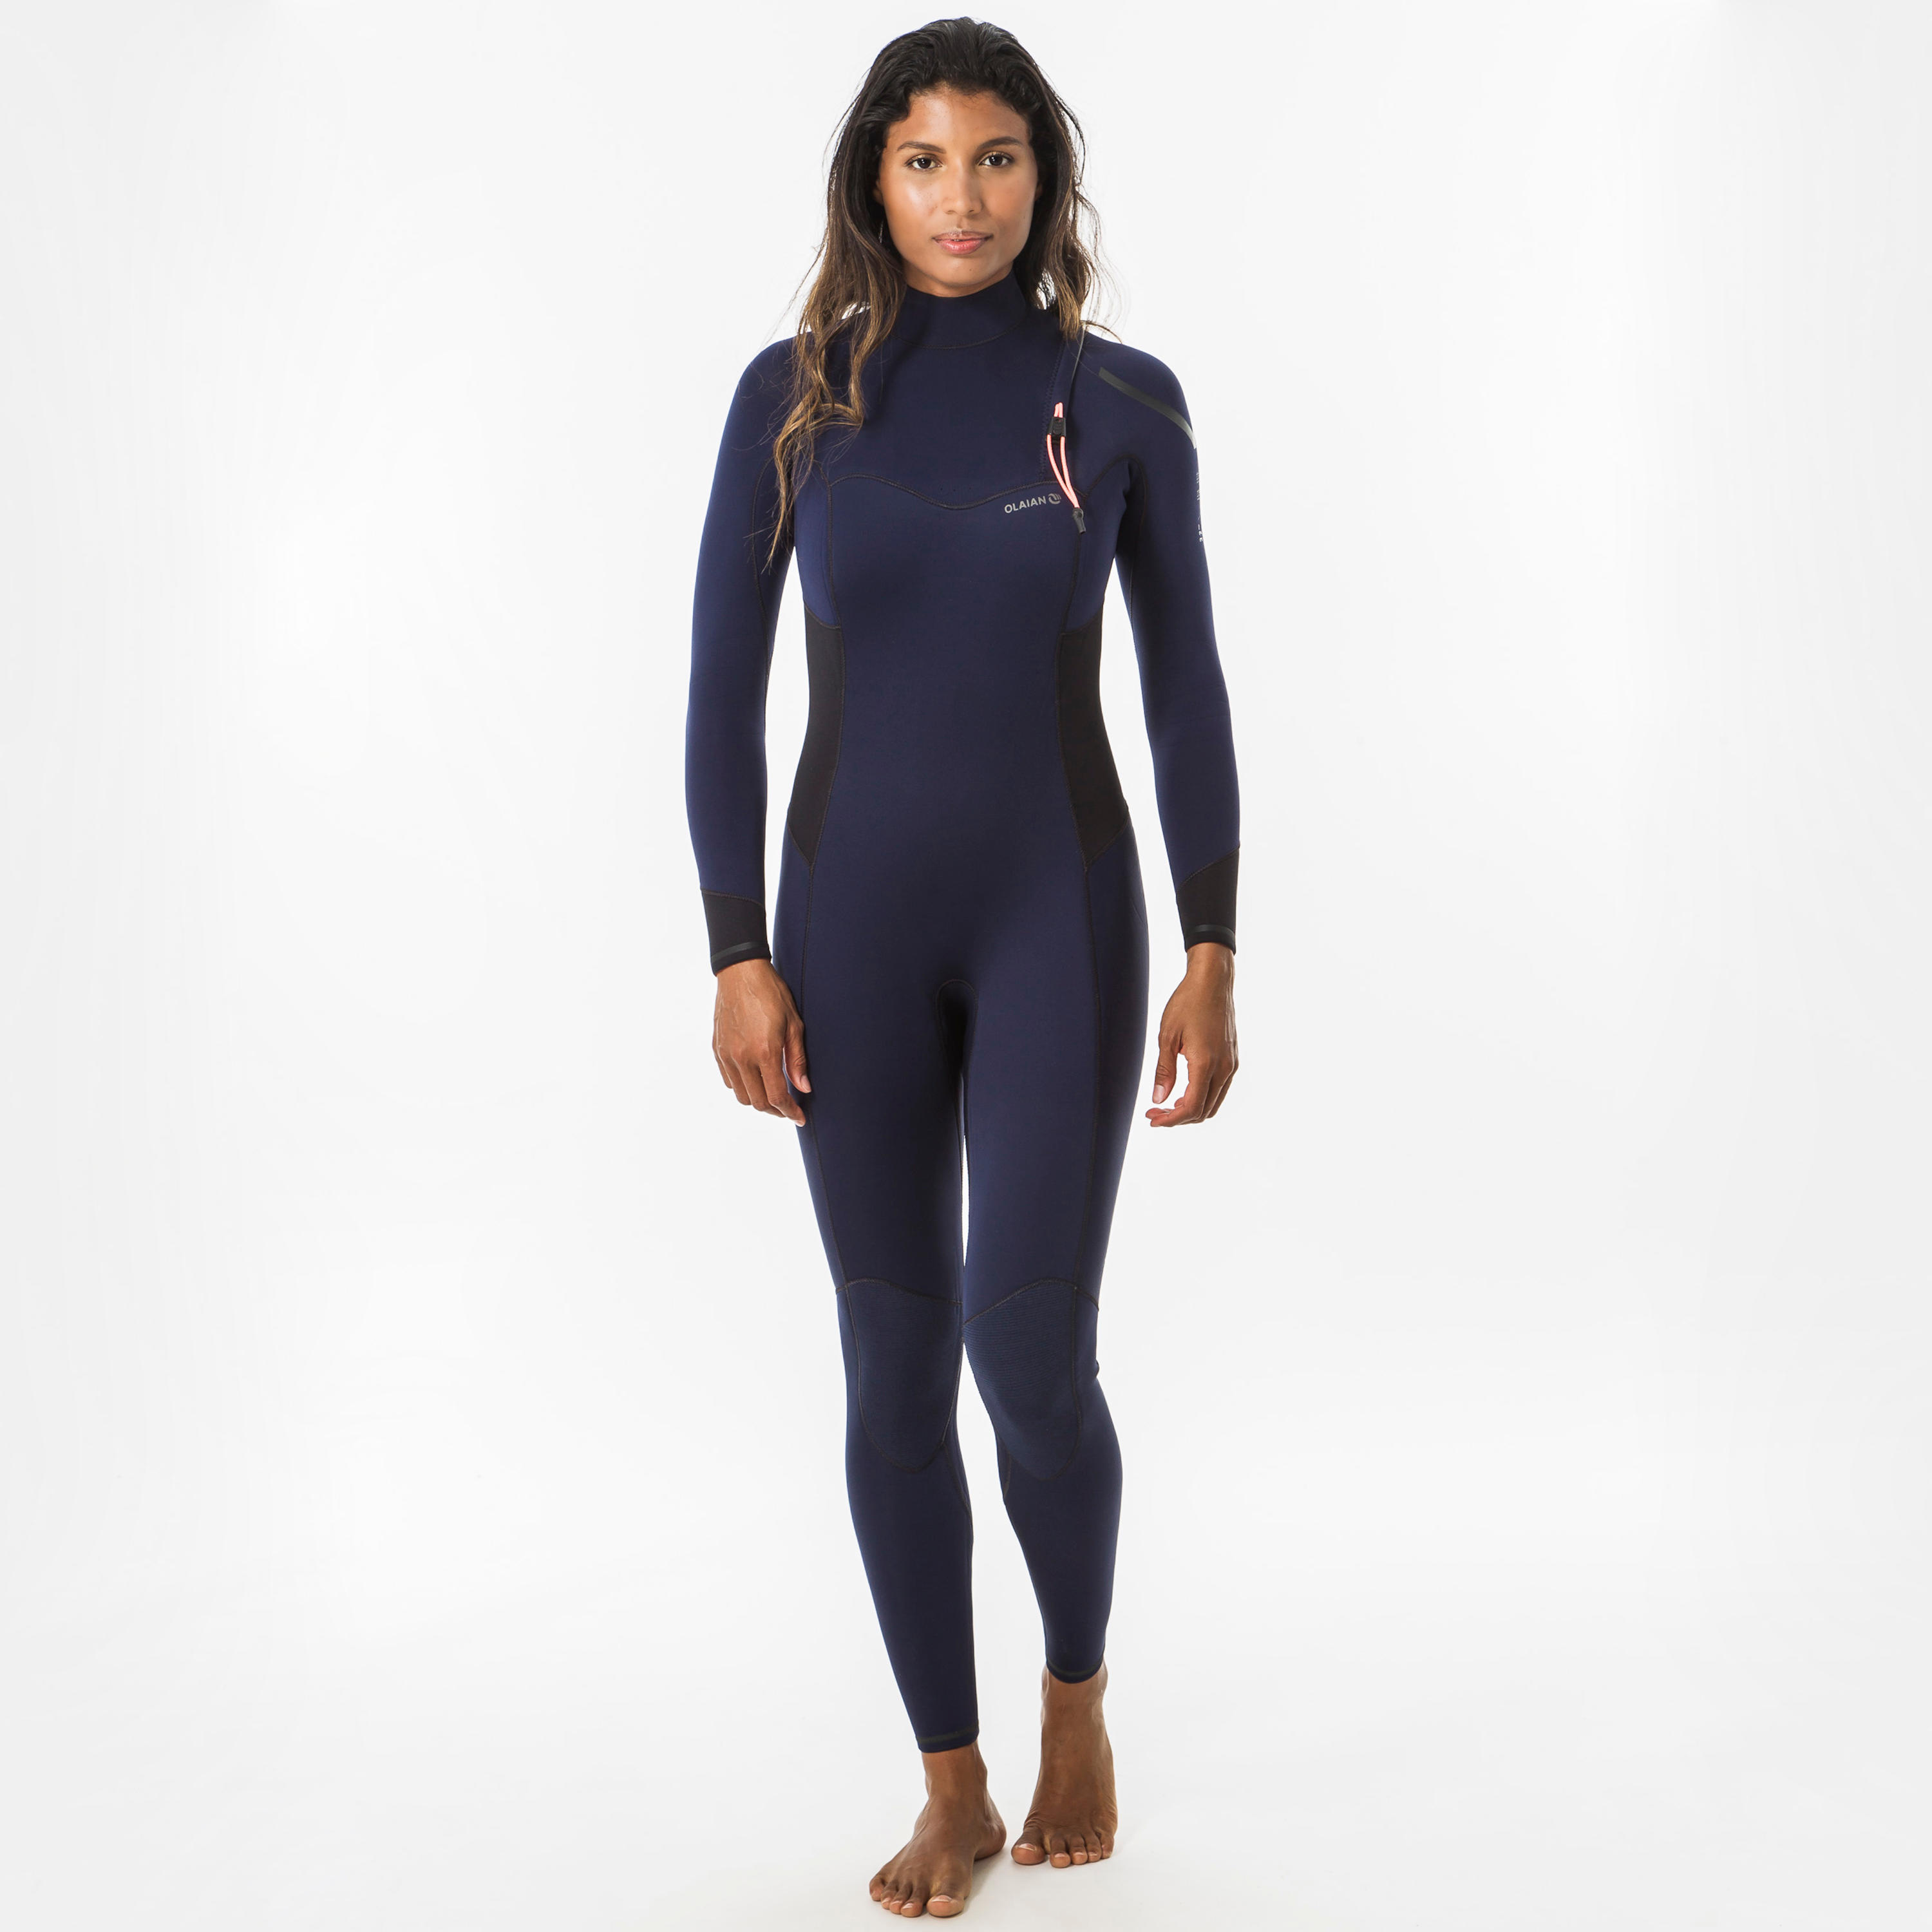 decathlon ladies wetsuit